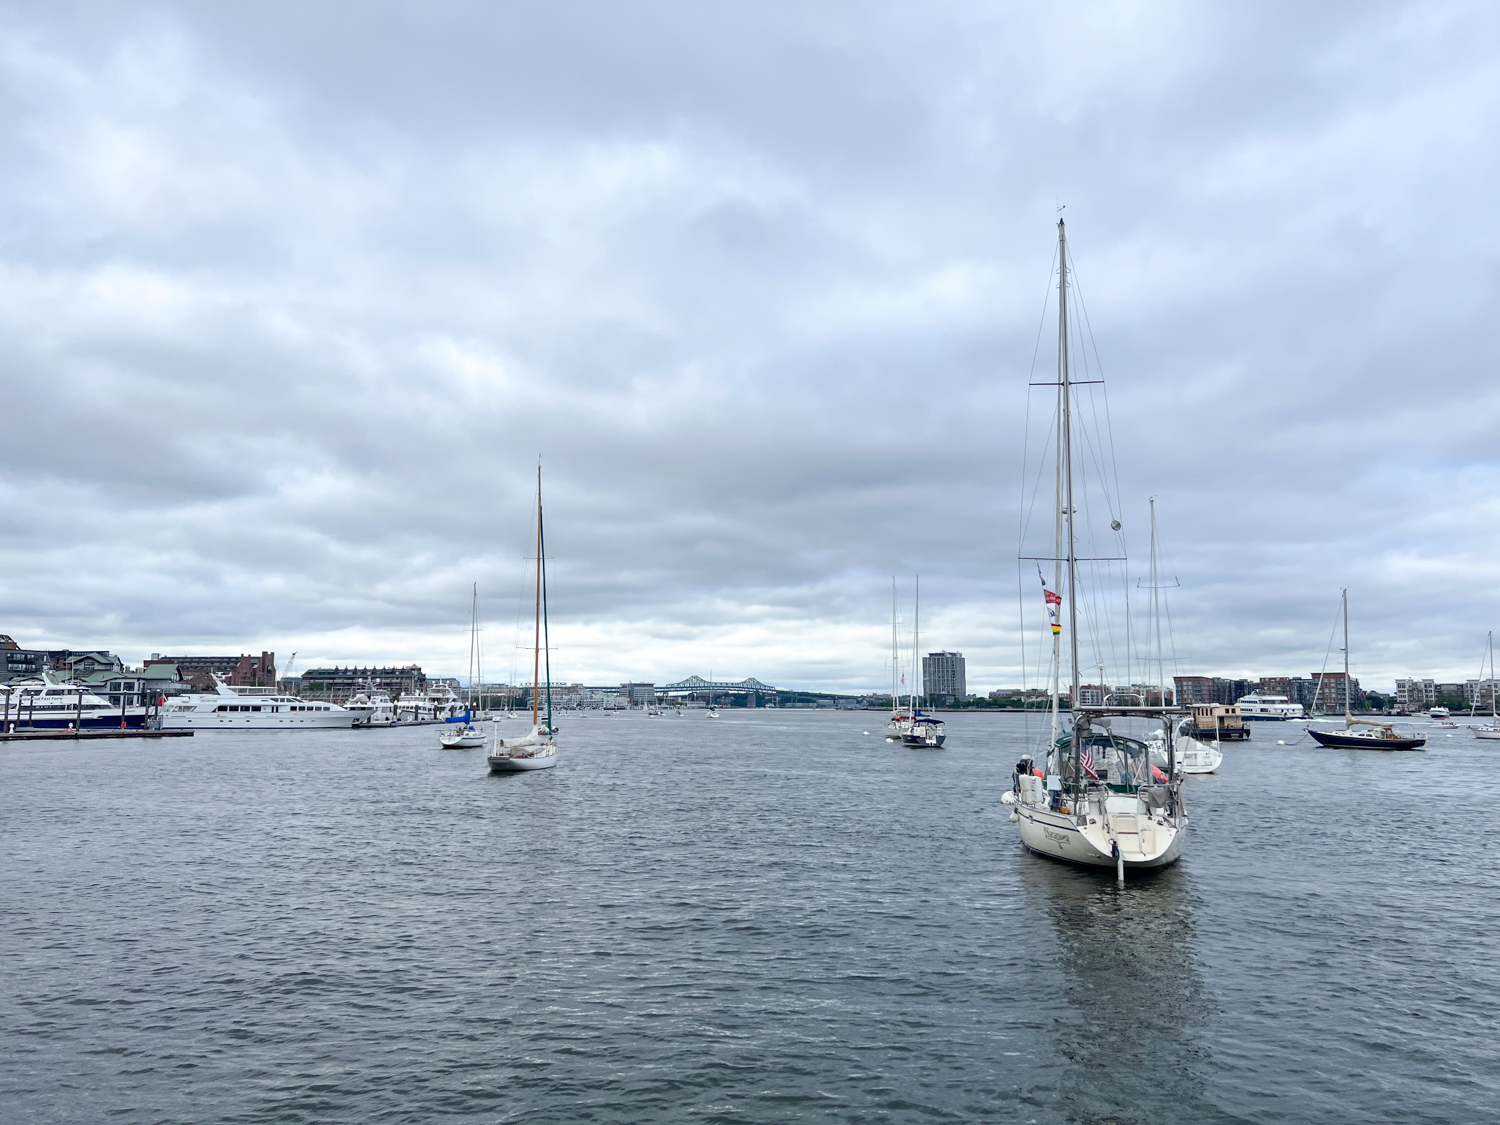 Departing Boston Harbor